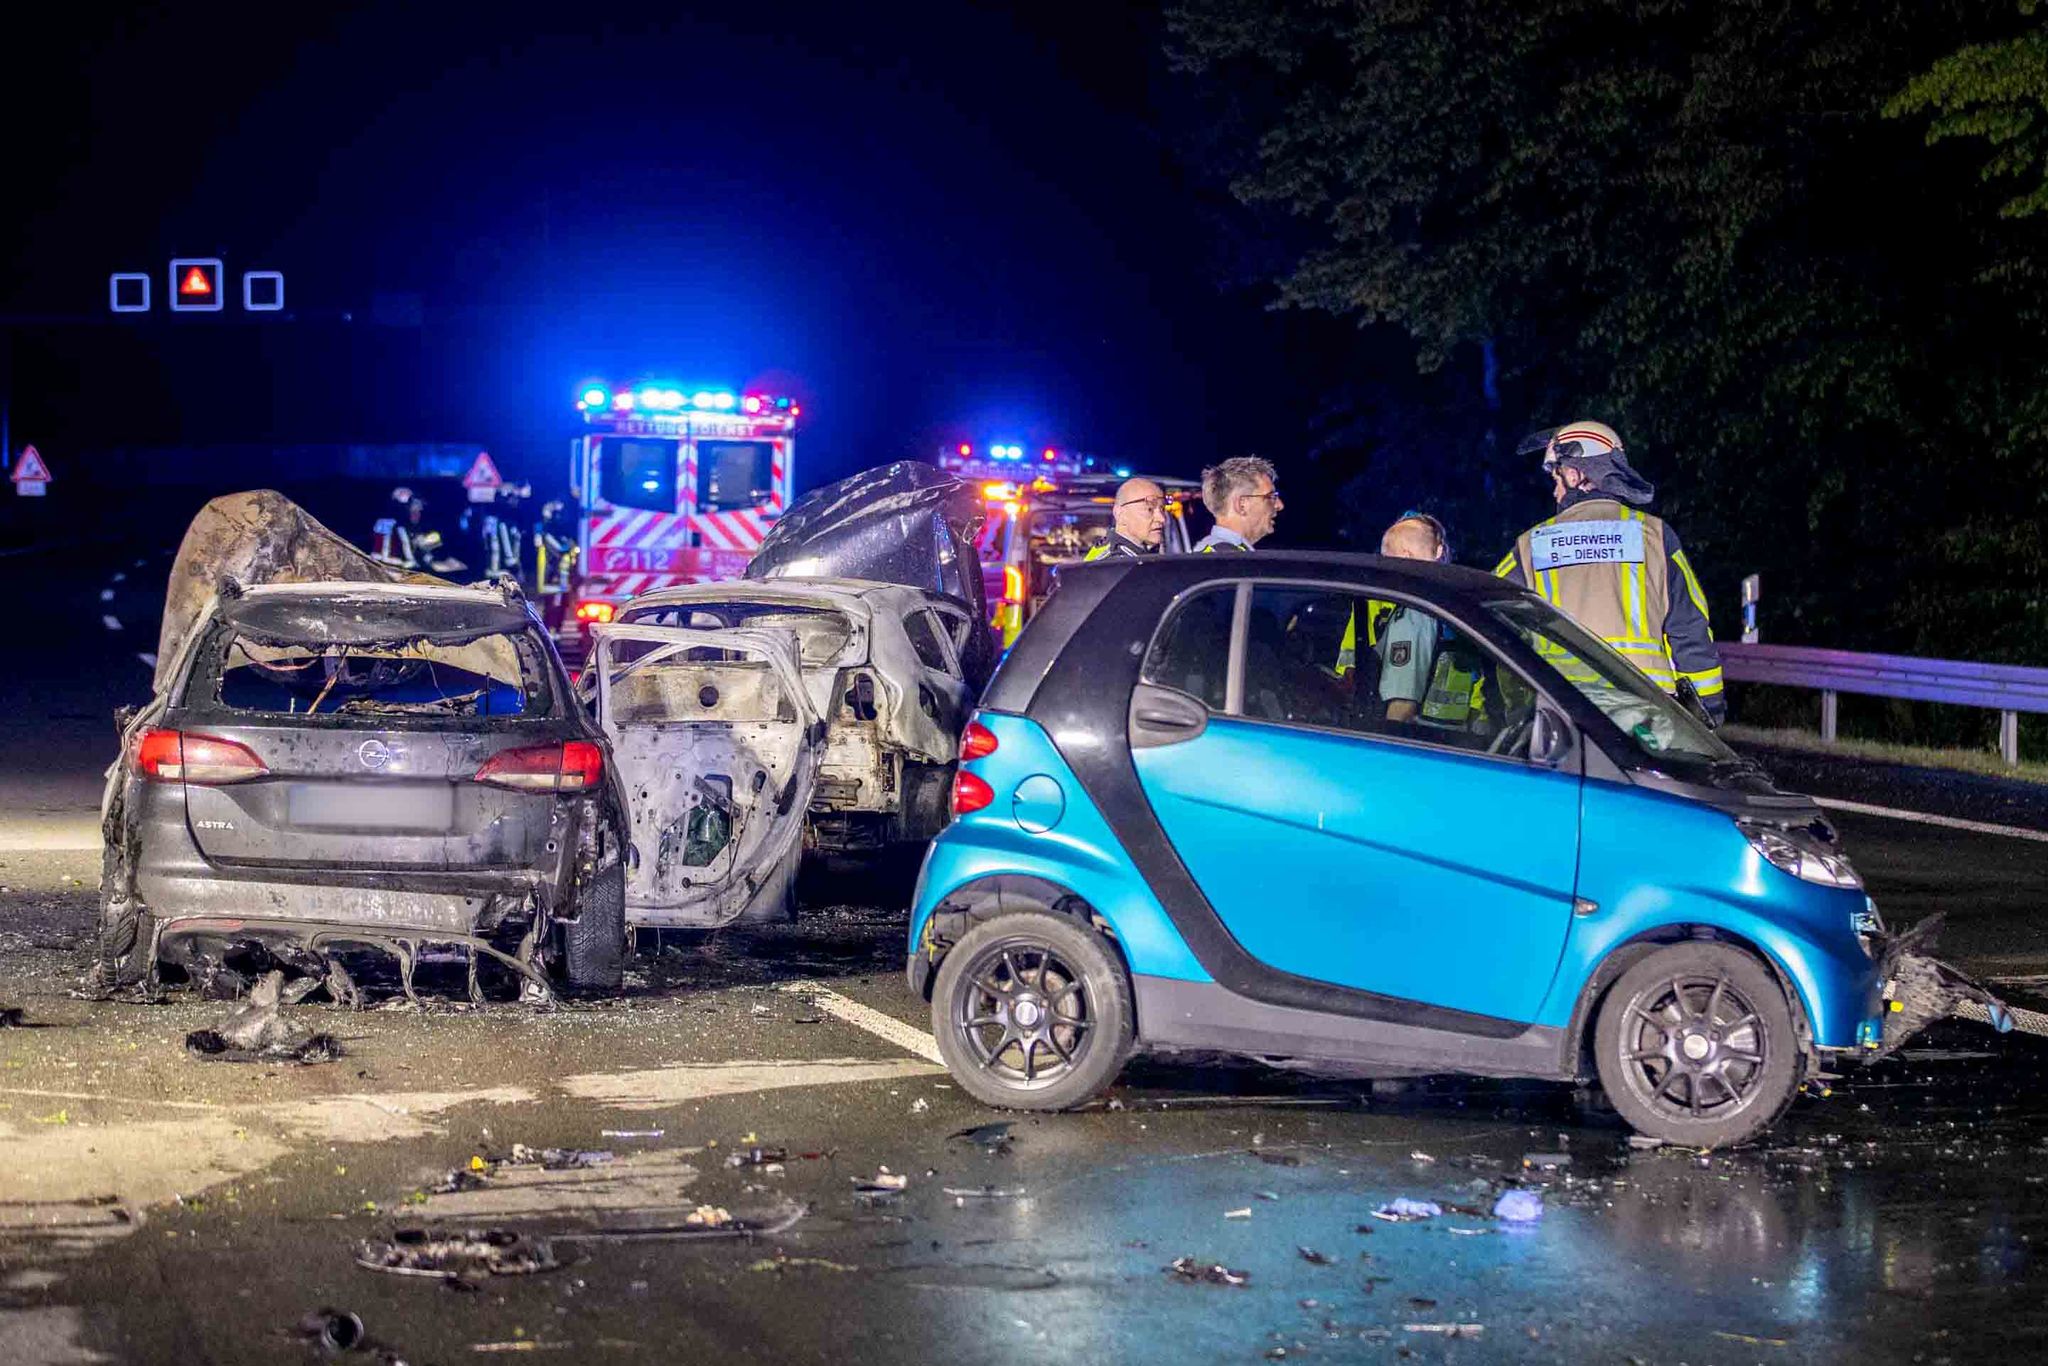 Oberfranken: Motorrad-Fahrer stirbt nach Traktor-Crash, News